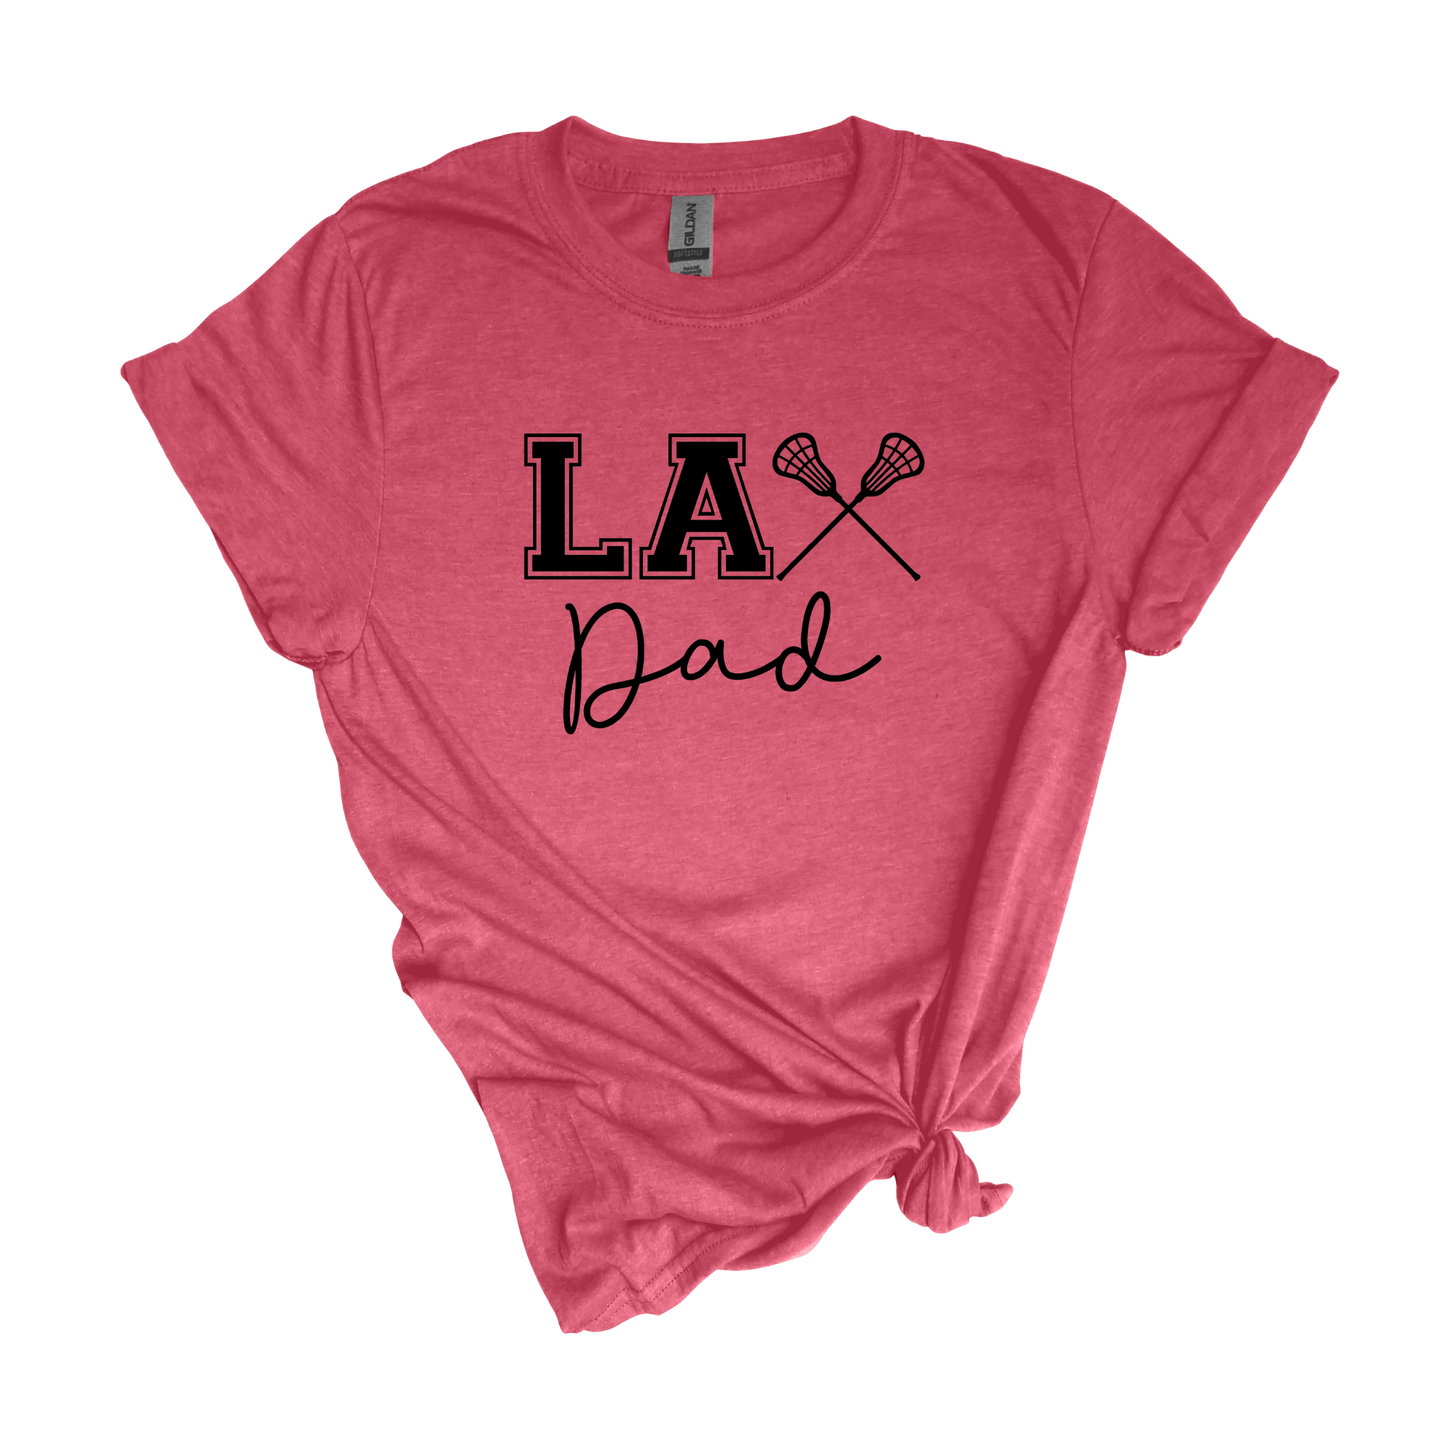 LAX Dad - Adult Unisex Soft T-shirt